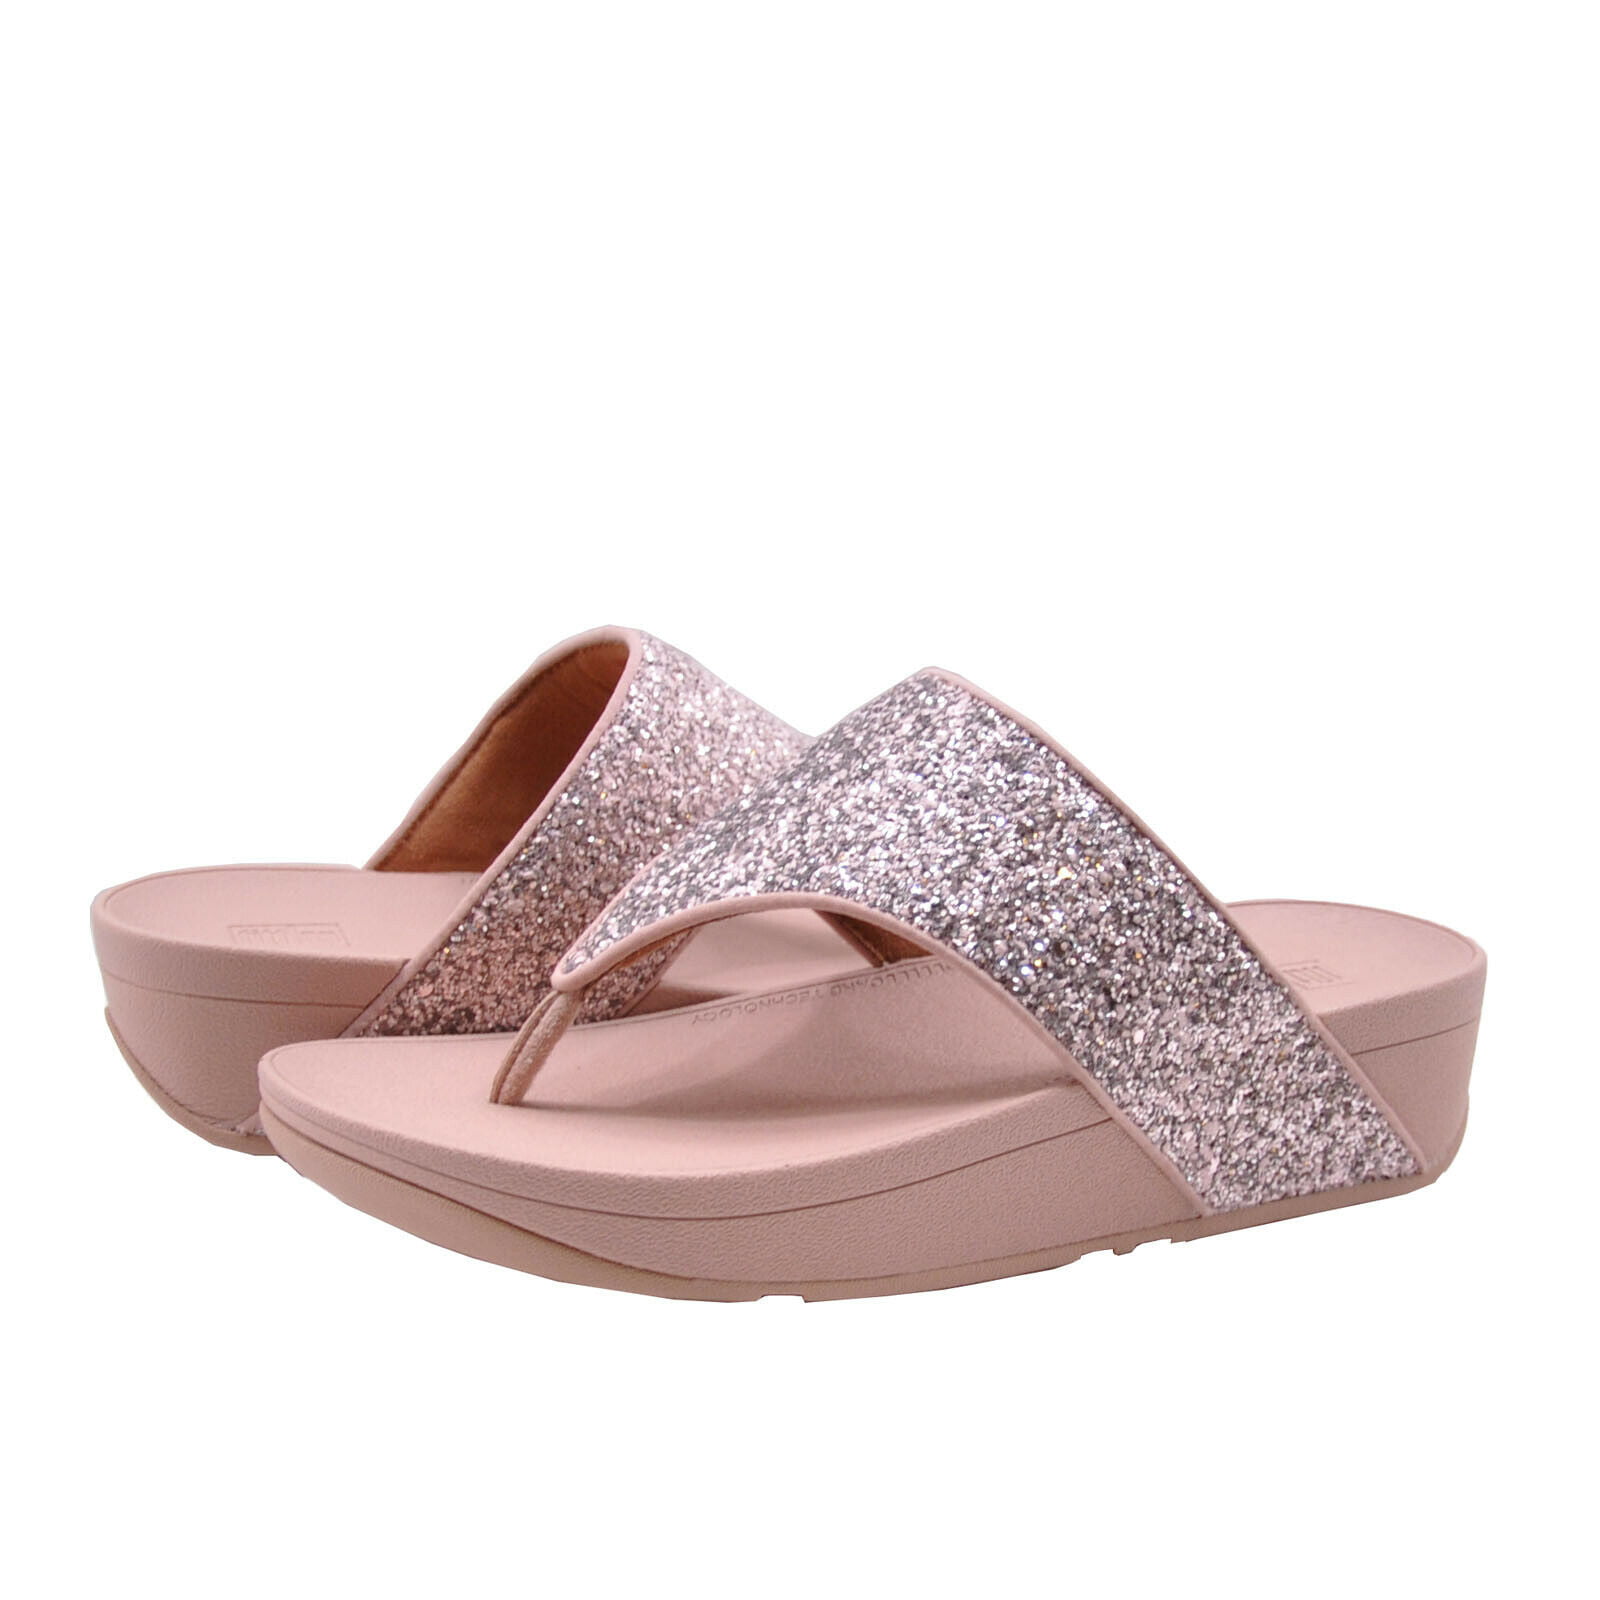 FitFlop Women's Olive Glitter Toe Post Wedge Sandal DO3-807 - Walmart.com